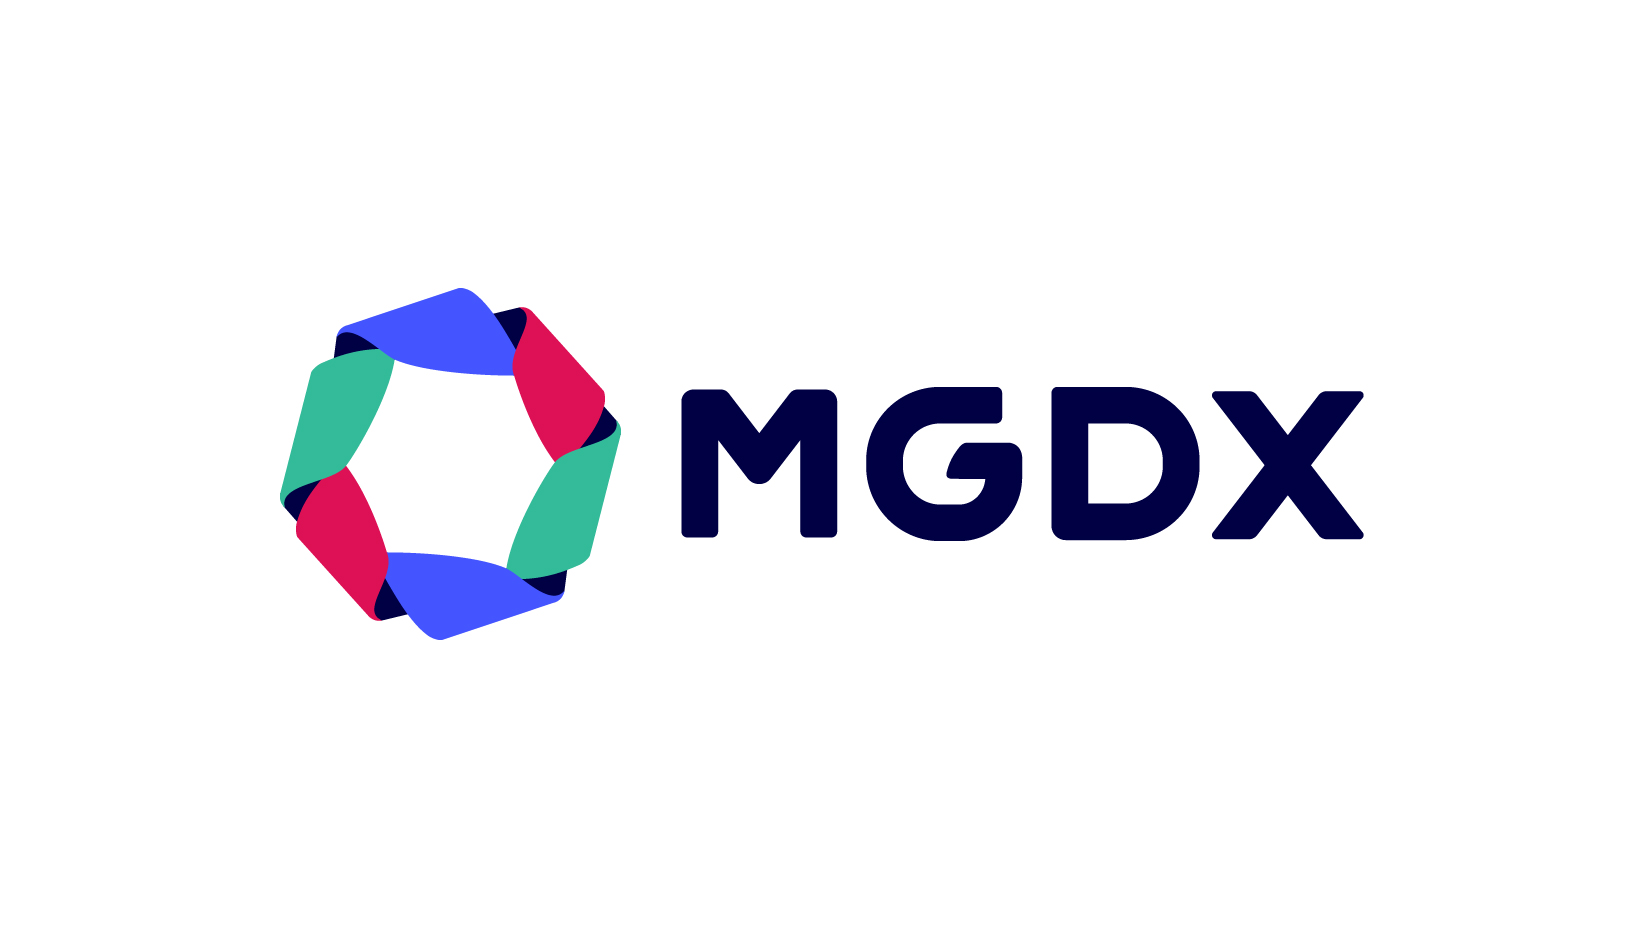 MG-DX